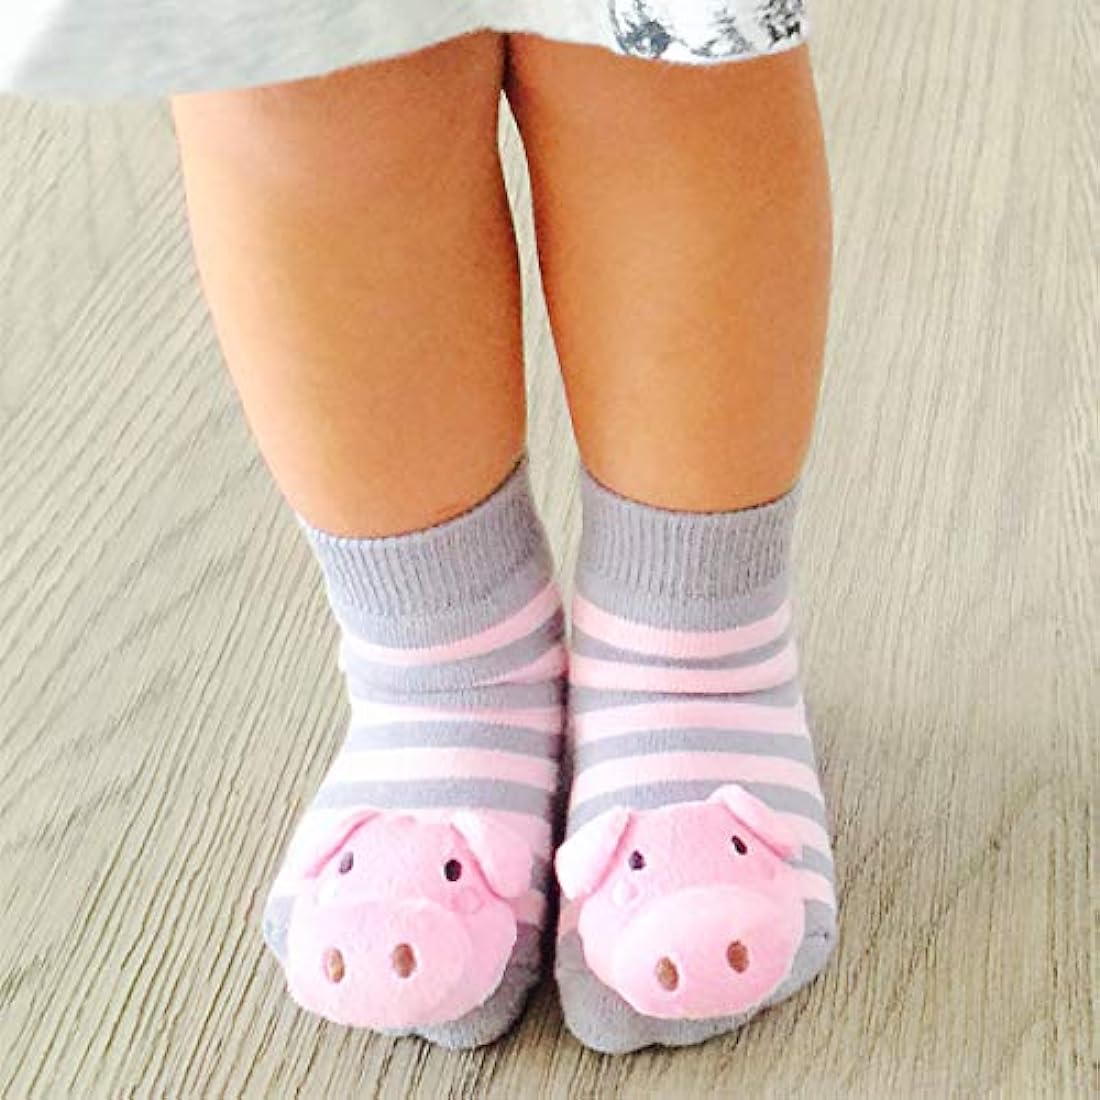 Unisex baby cotton rattle socks - grey/blue elephant, pink piggy  or black/white panda